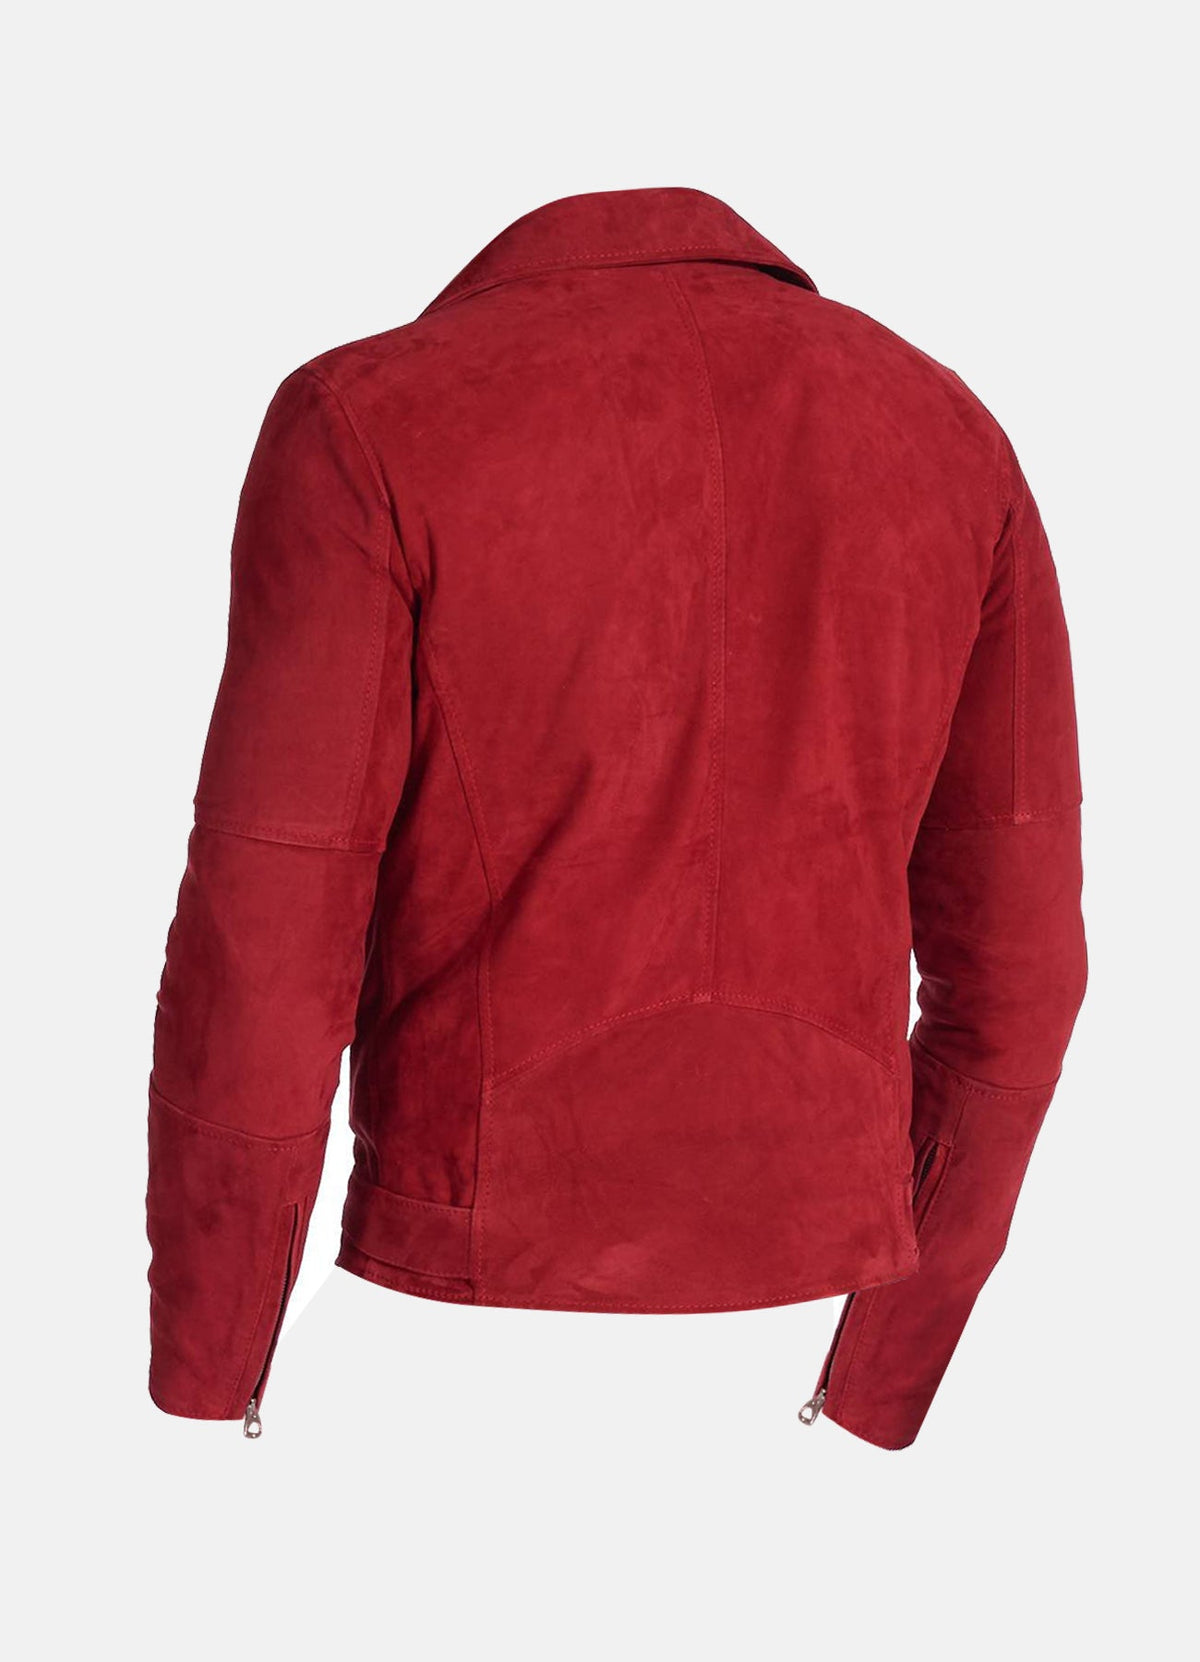 Mens Burgendy Red Suede Leather Jacket